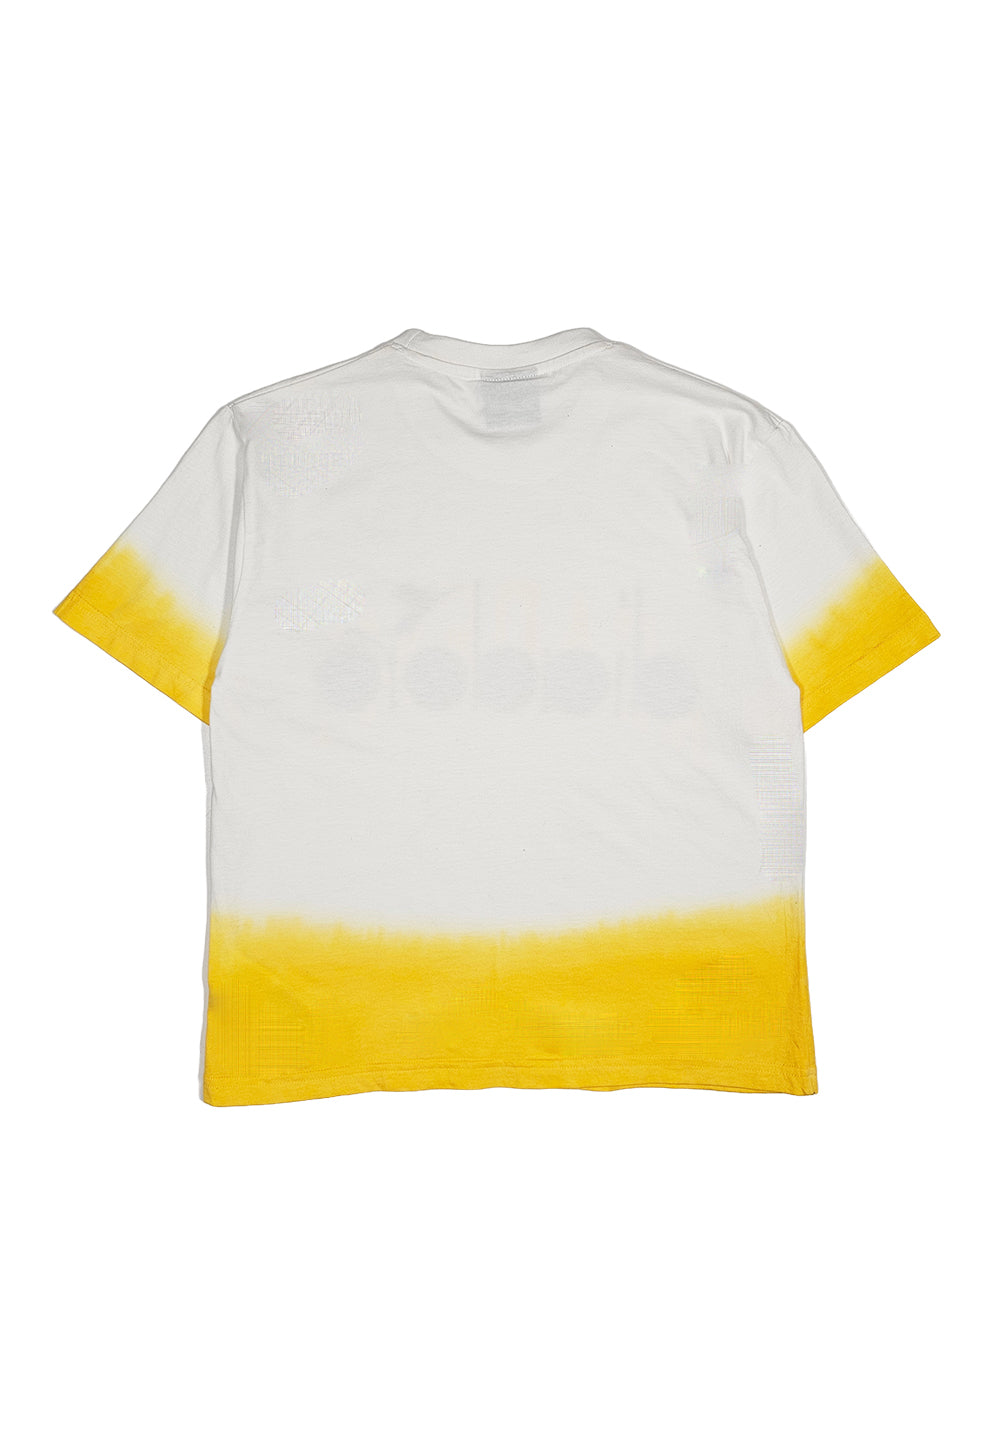 White-yellow t-shirt for boys